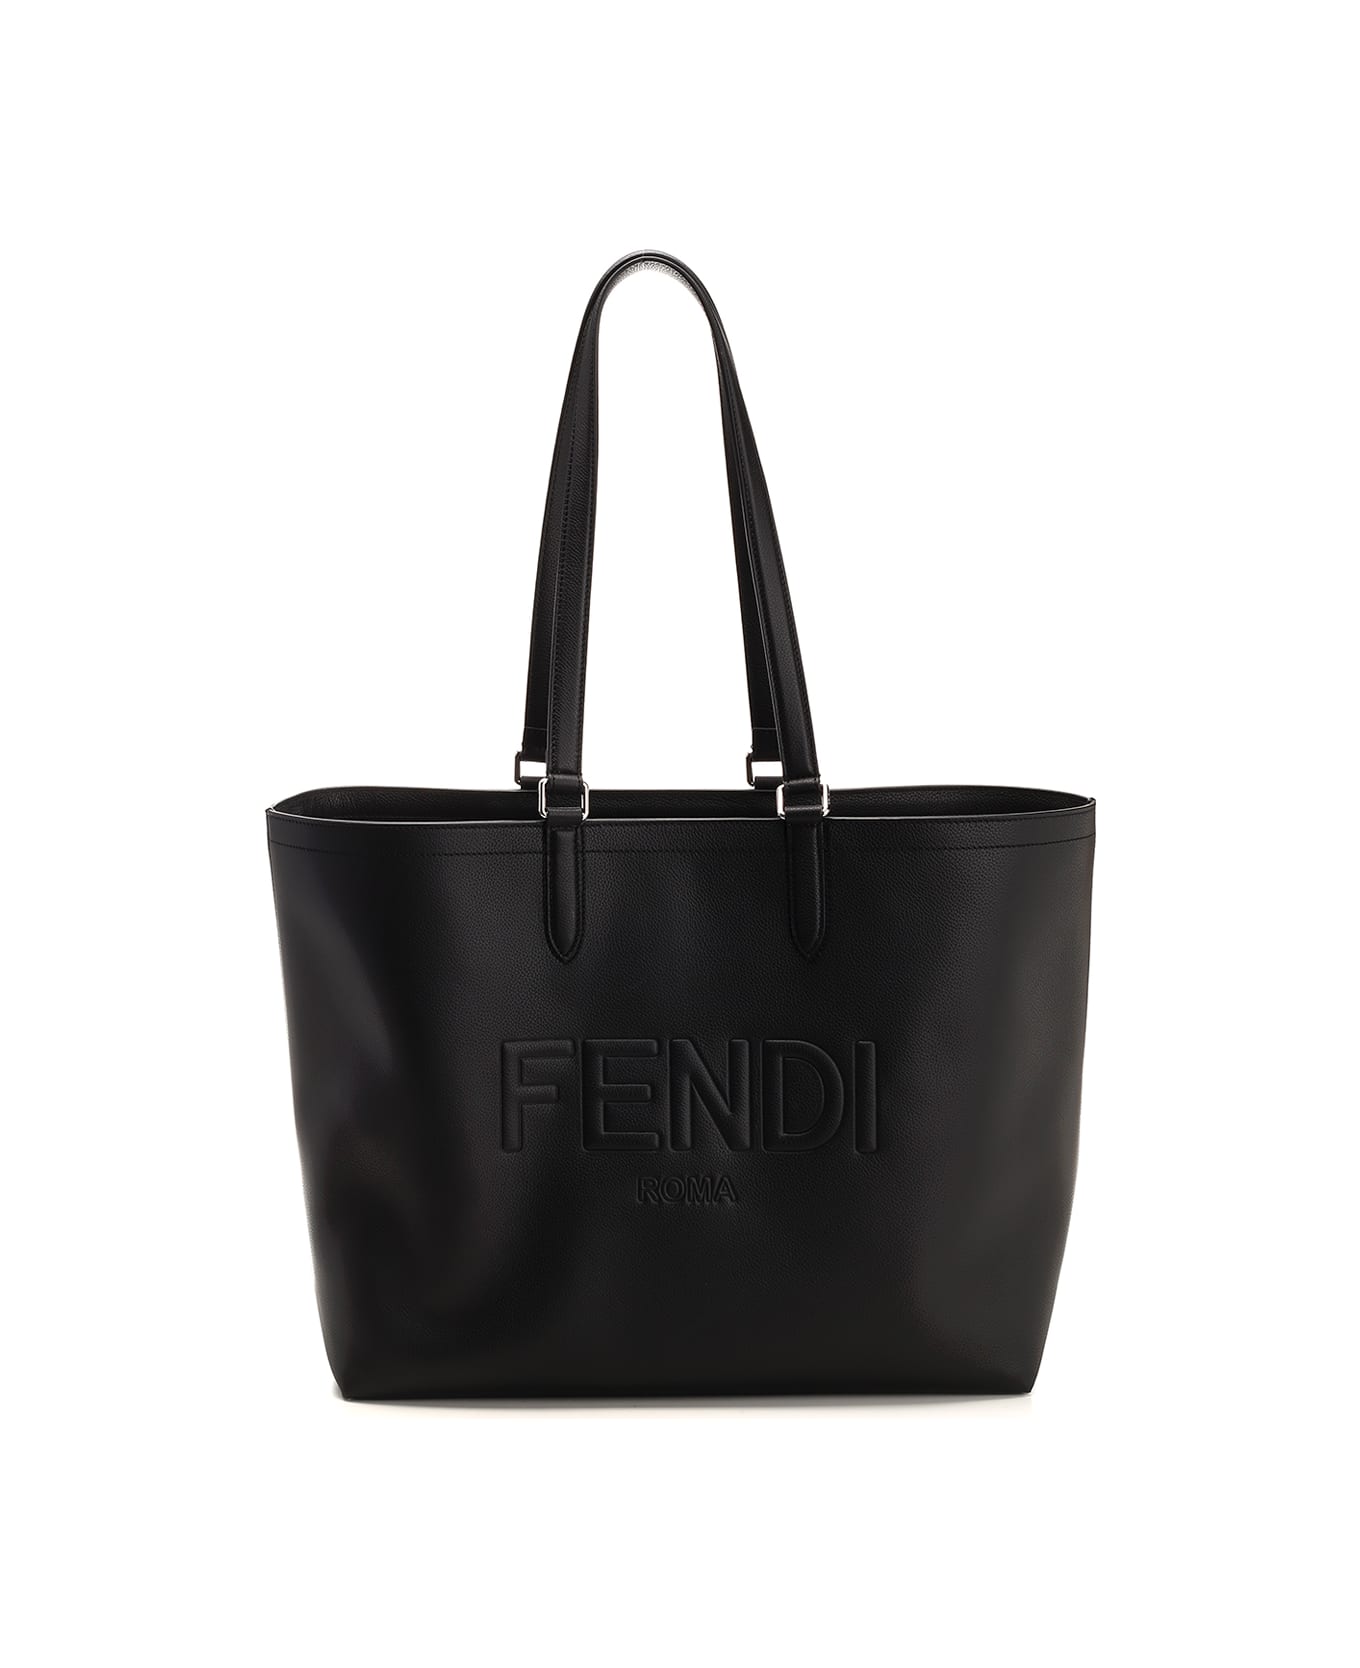 Fendi Tote Bag - Black